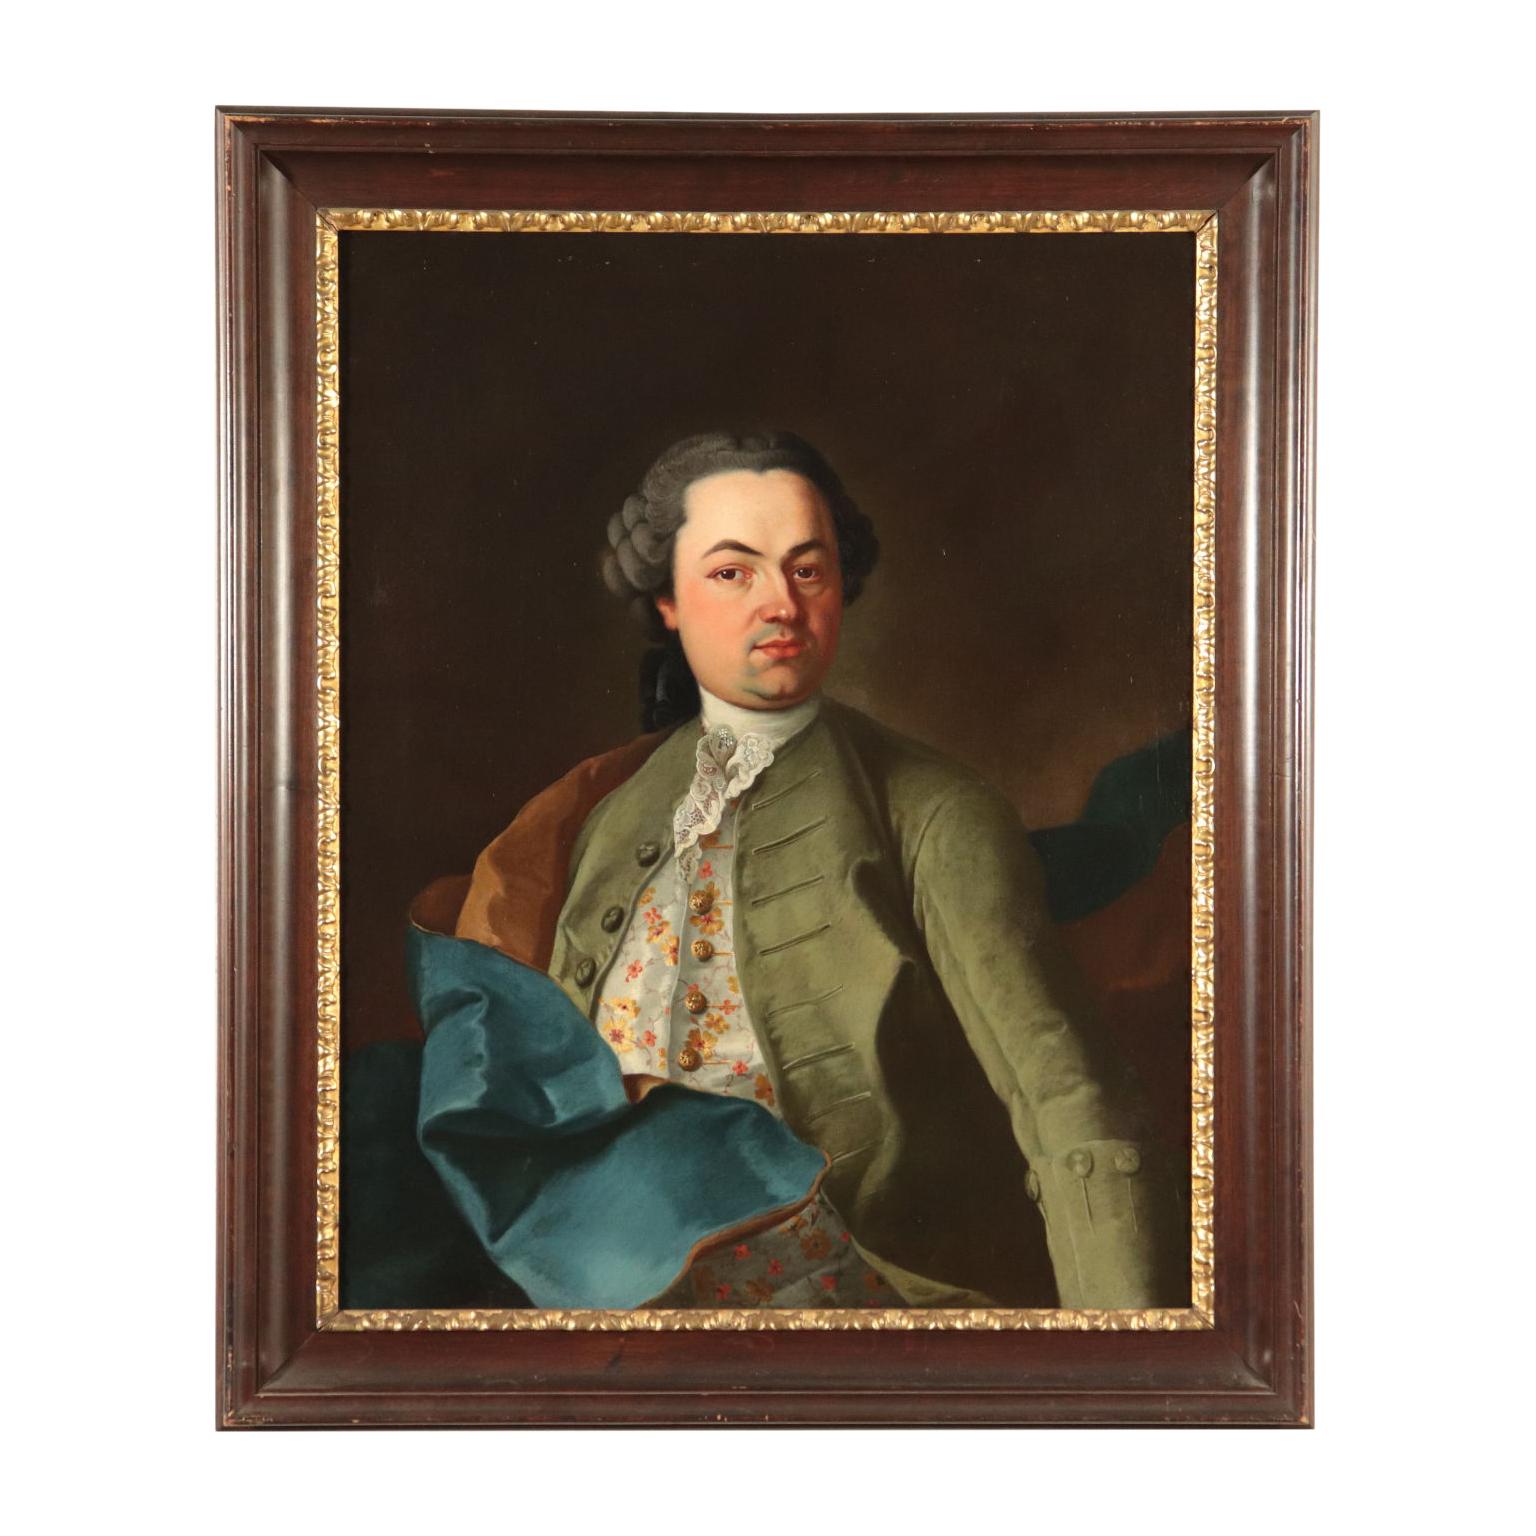 Unknown Portrait Painting - Portrait of a Gentleman, Oil on Canvas, Central-European School, 1700